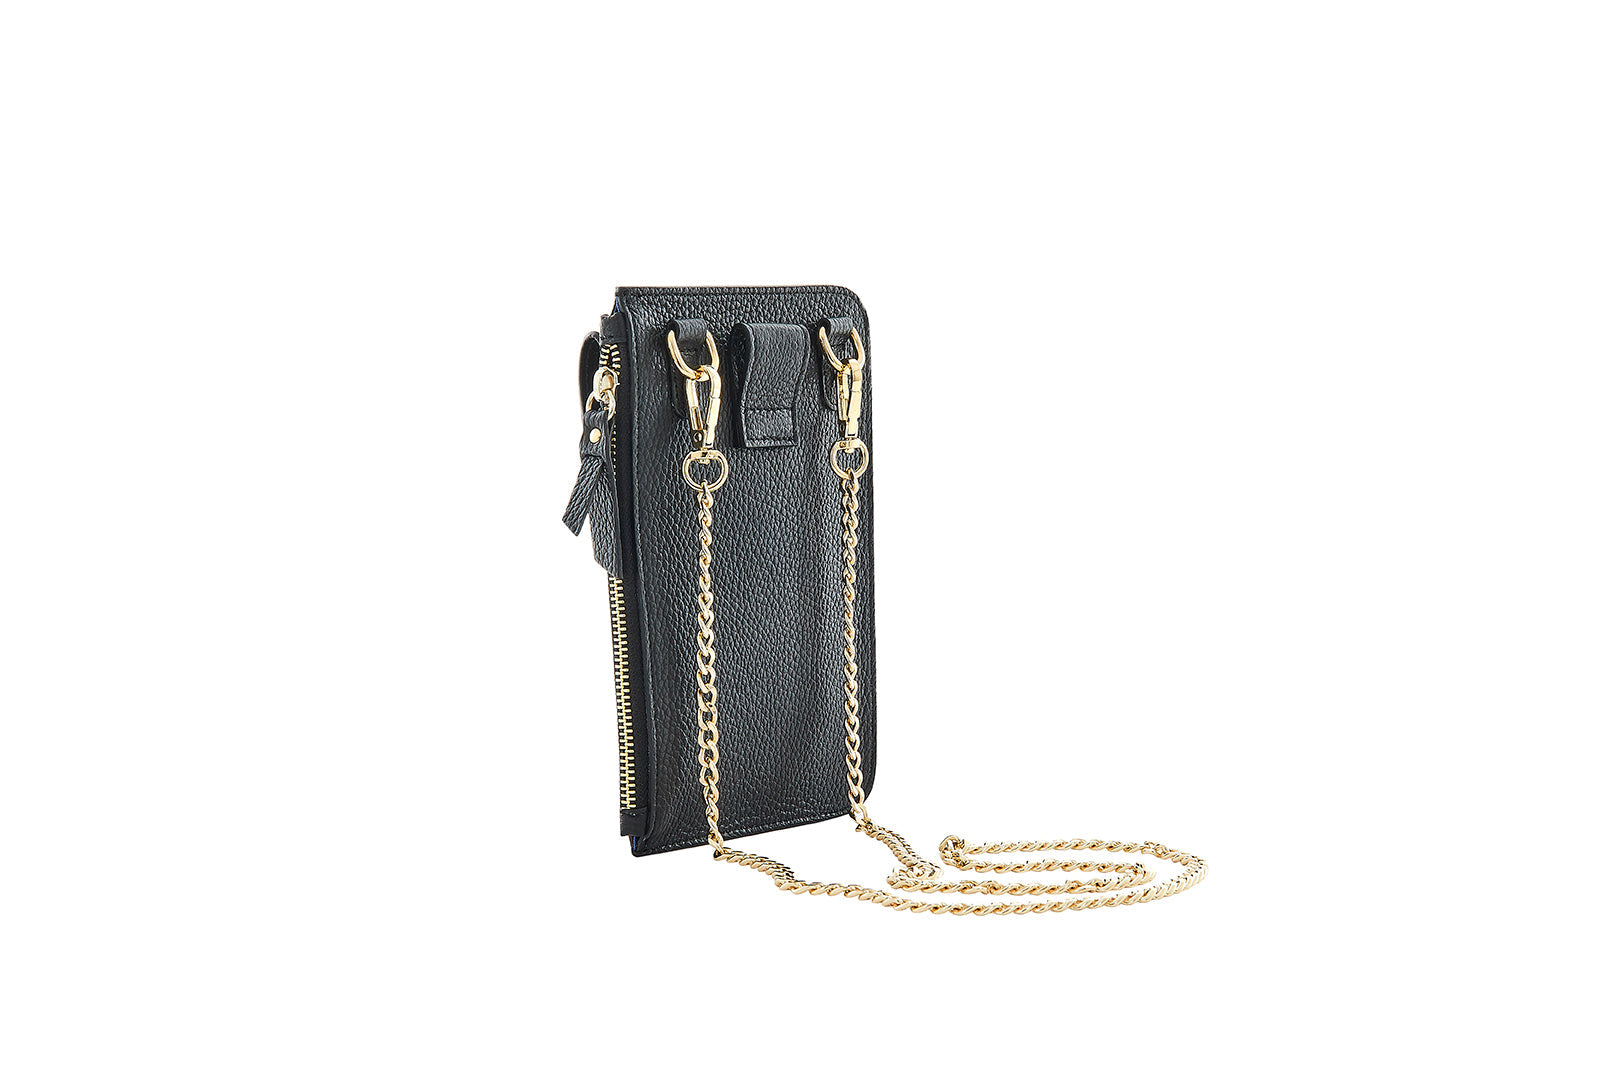 DORINA Pebble Grain Leather Phone Case with Chain Strap